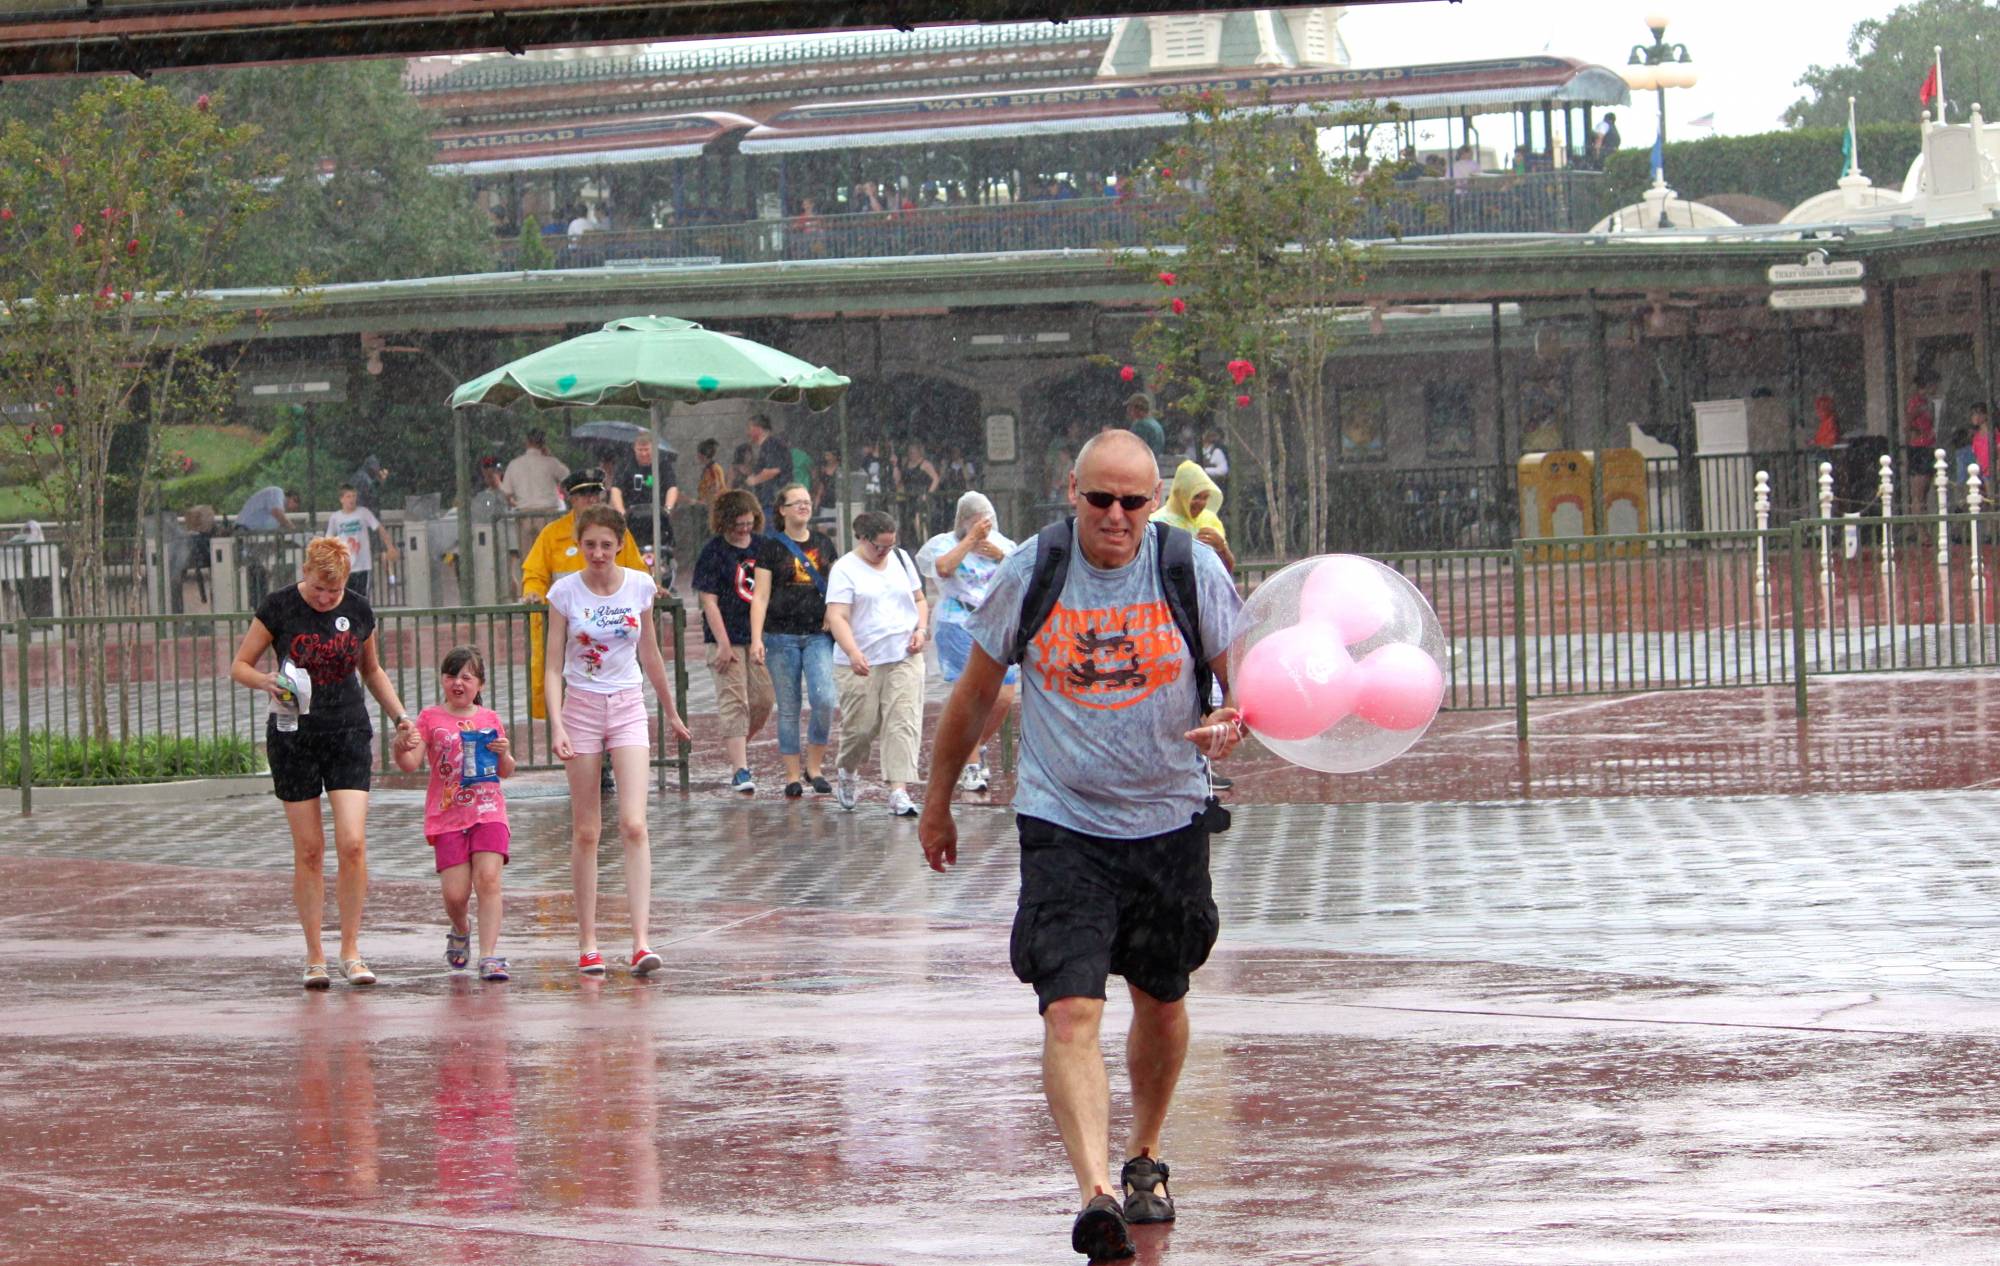 Don't let rain dampen your fun on your Disney vacation | PassPorter.com